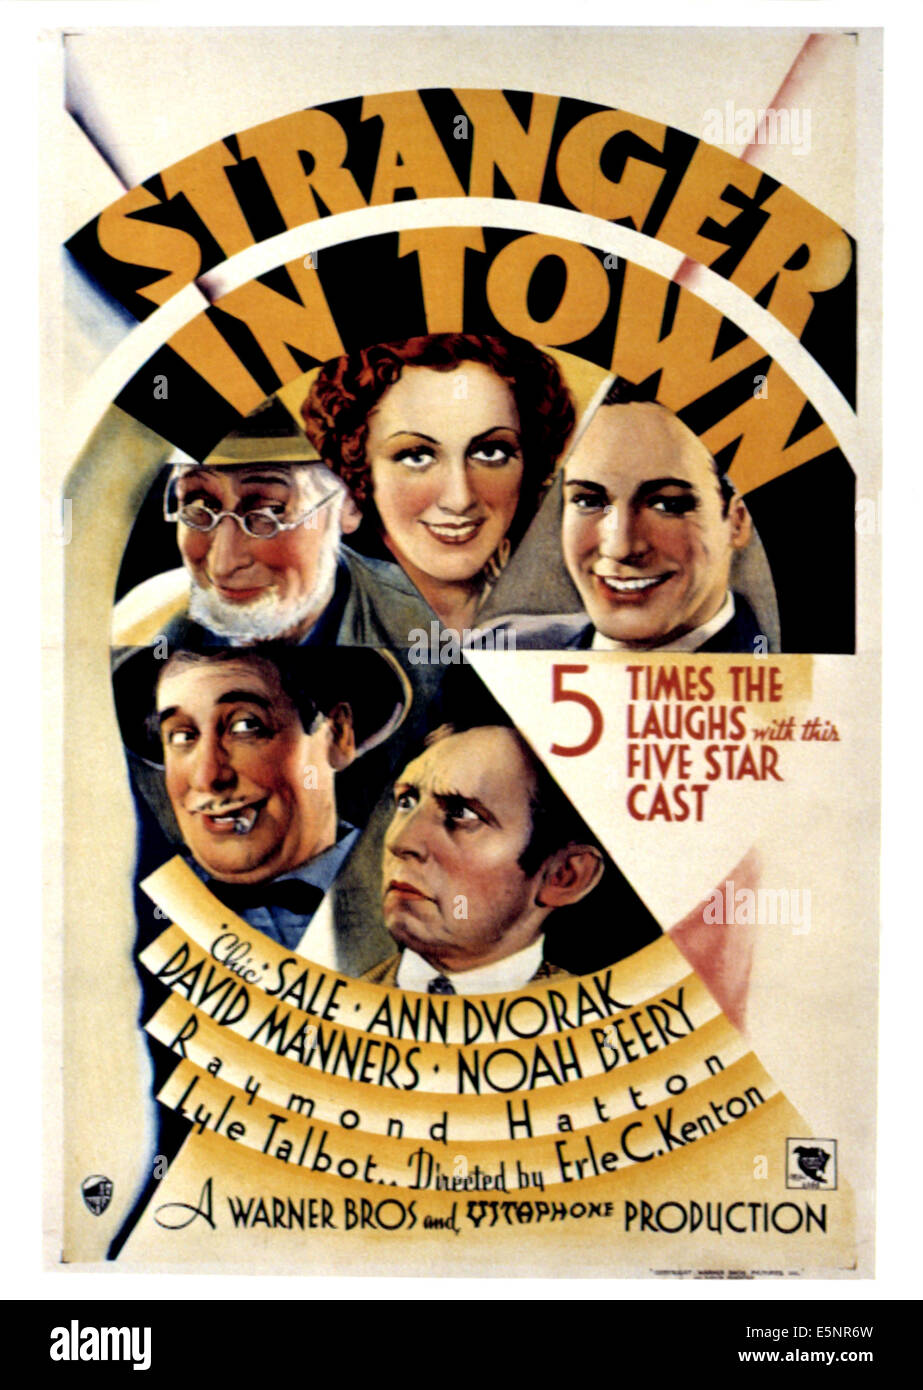 STRANGER IN TOWN, Chic Sale, Ann Dvorak, David Manners, Noah Beery, Sr., Raymond Hatton, 1932 Stock Photo